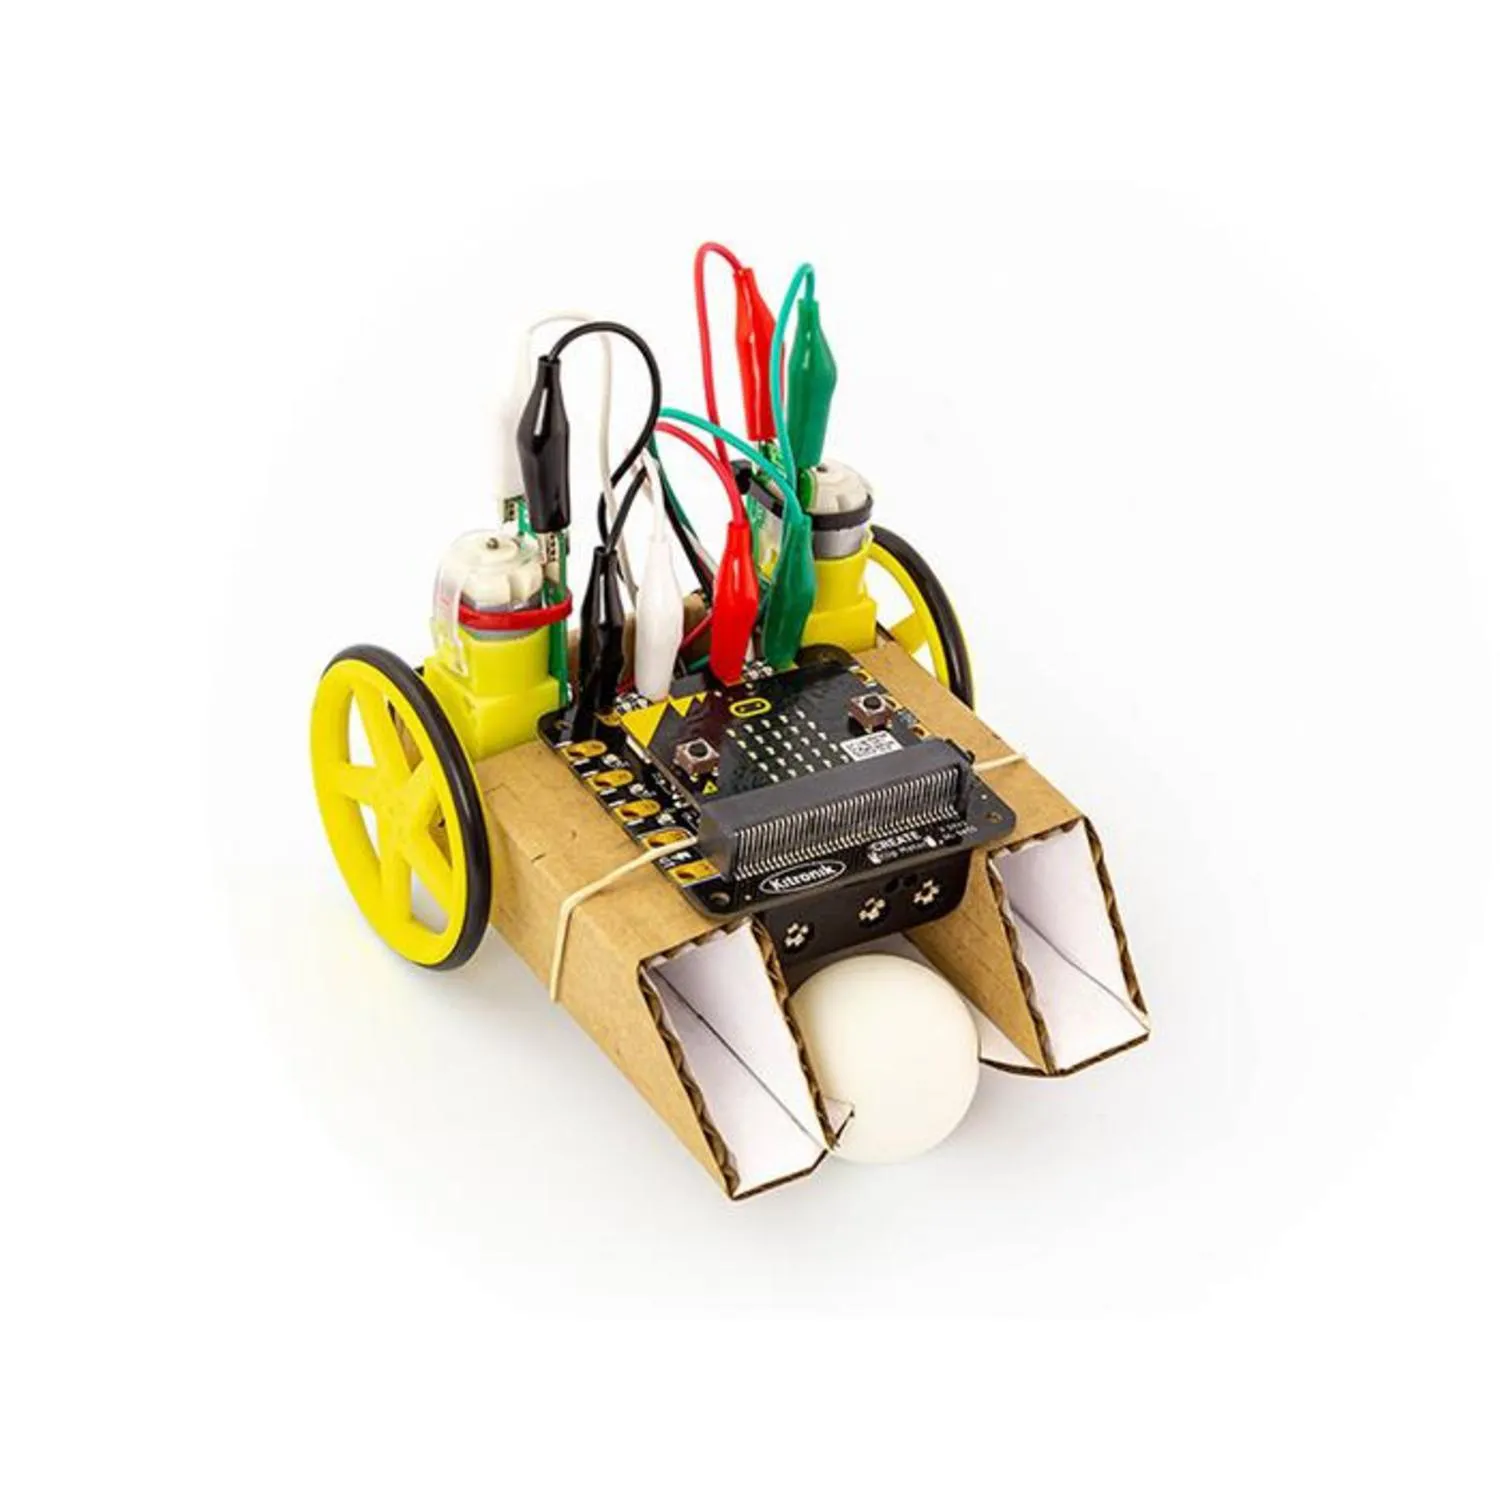 Photo of Kitronik Lesson in a Box ™ Simple Robotics for the BBC micro:bit